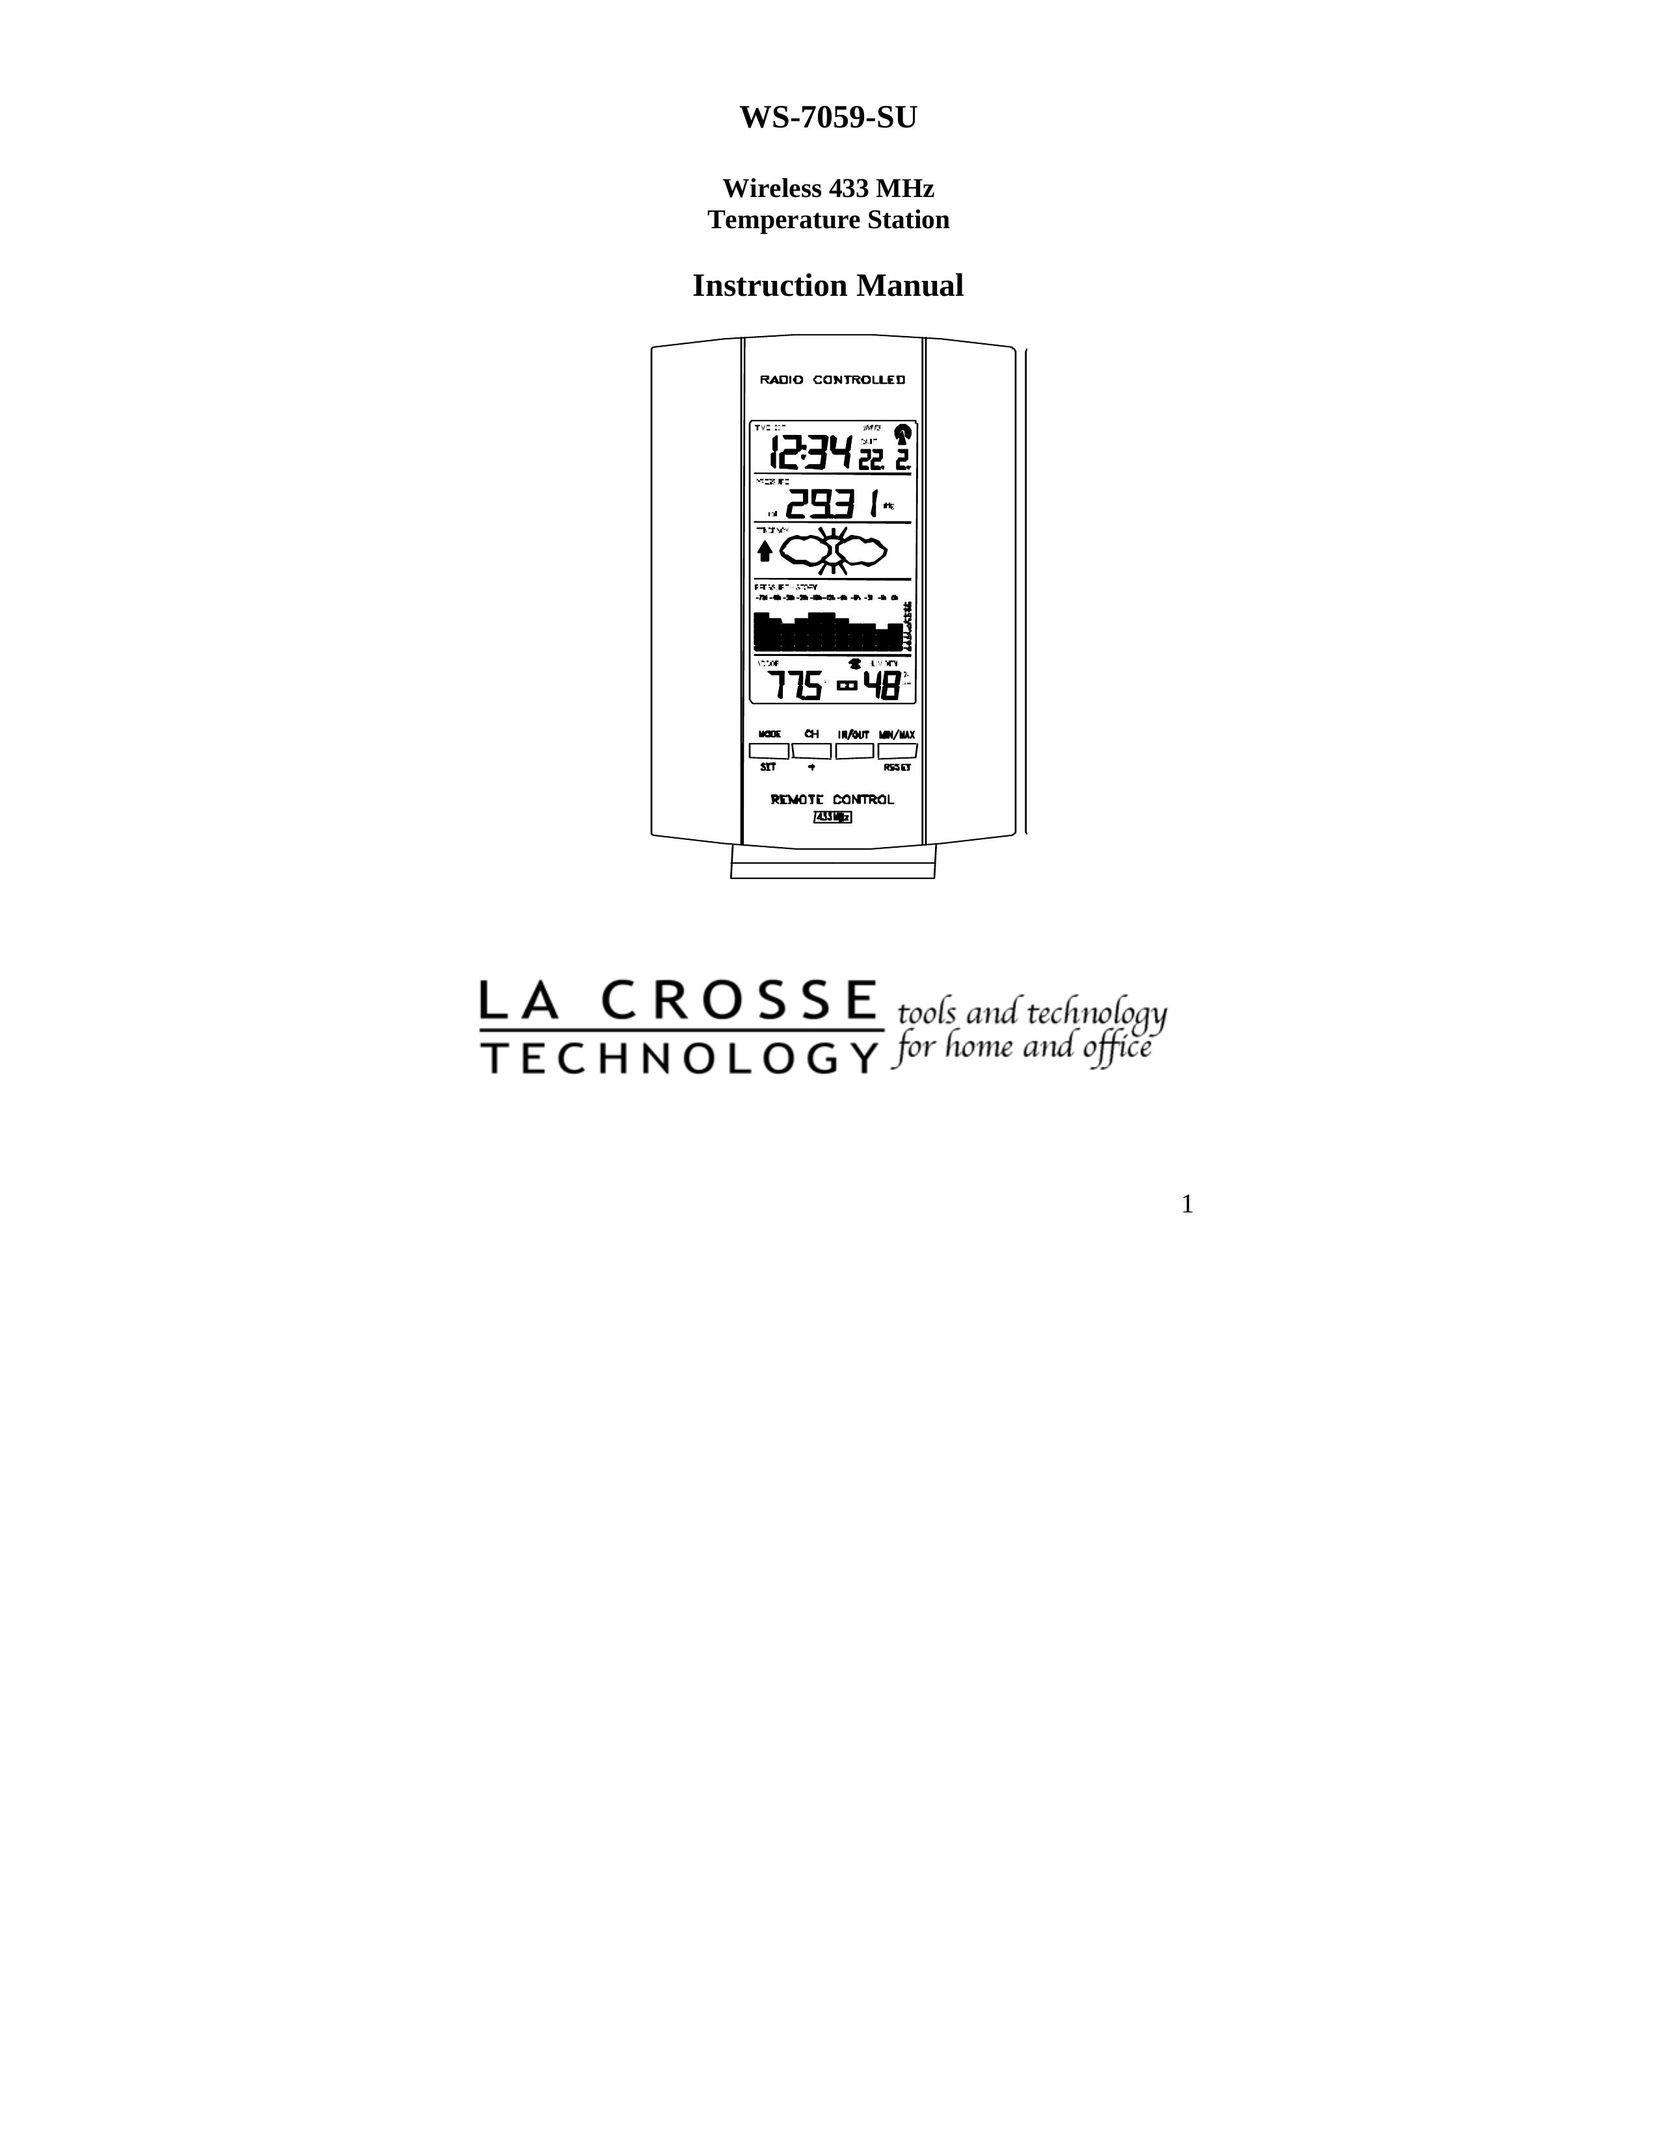 La Crosse Technology WS-7059-SU Portable Radio User Manual